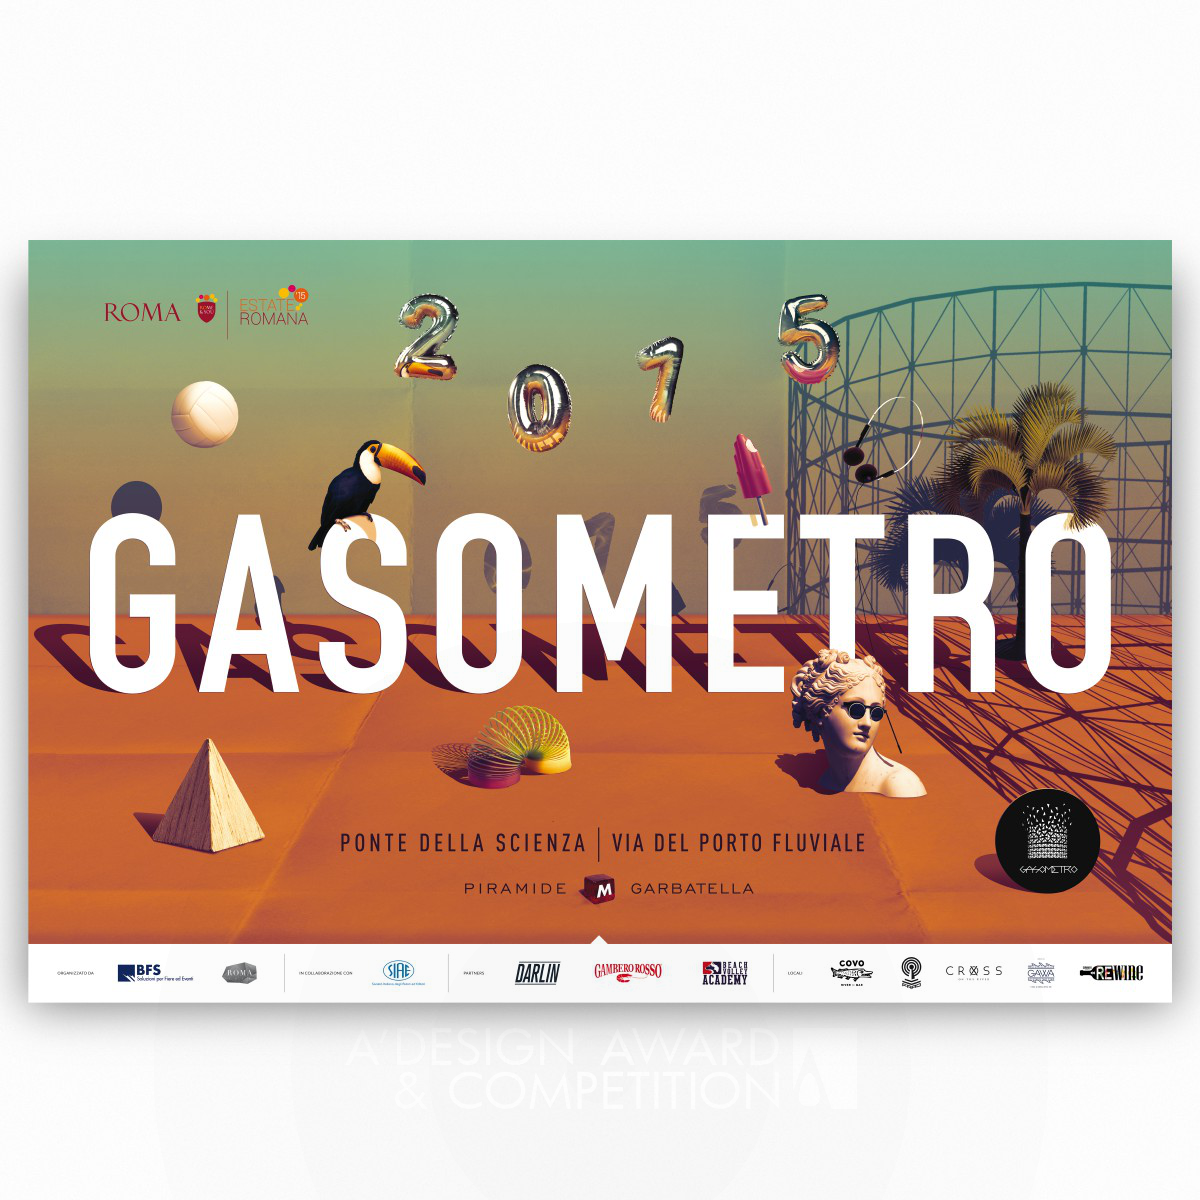 Gasometro 2015 Advertising